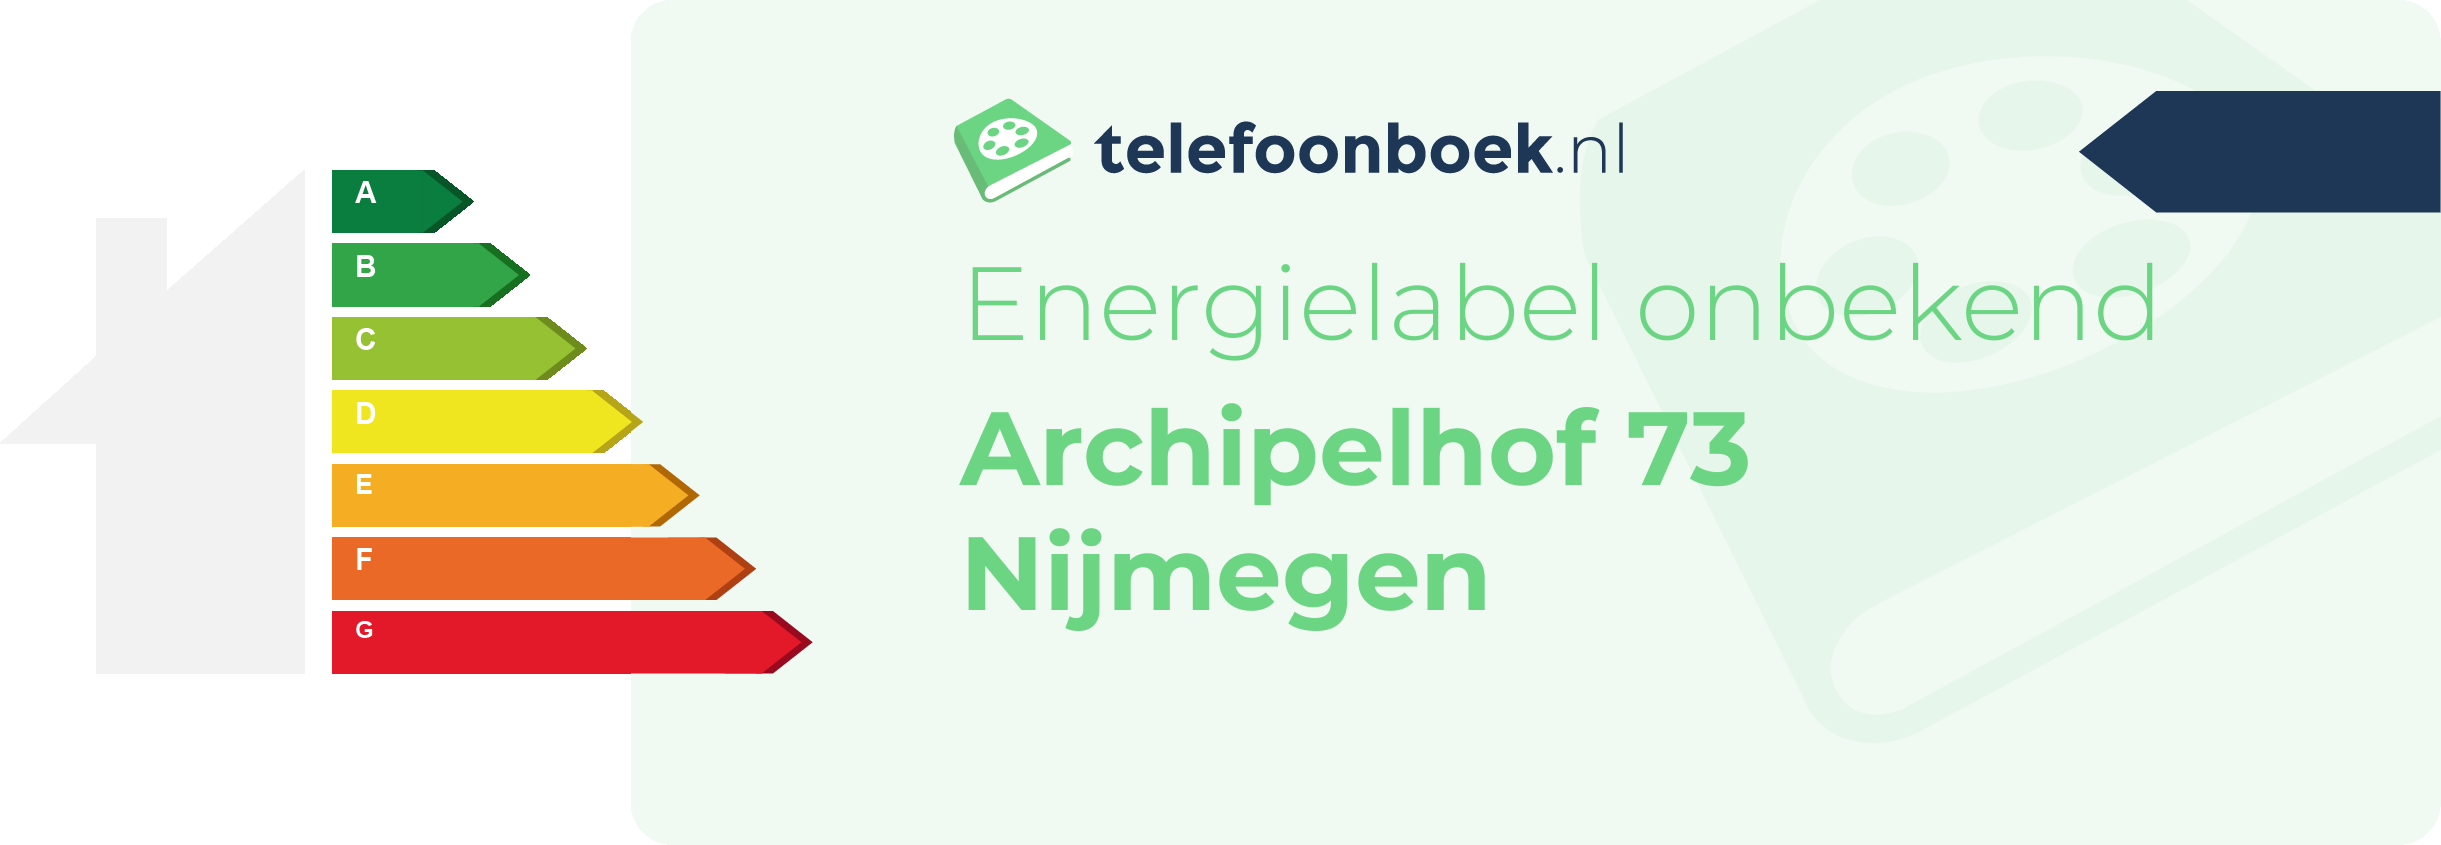 Energielabel Archipelhof 73 Nijmegen